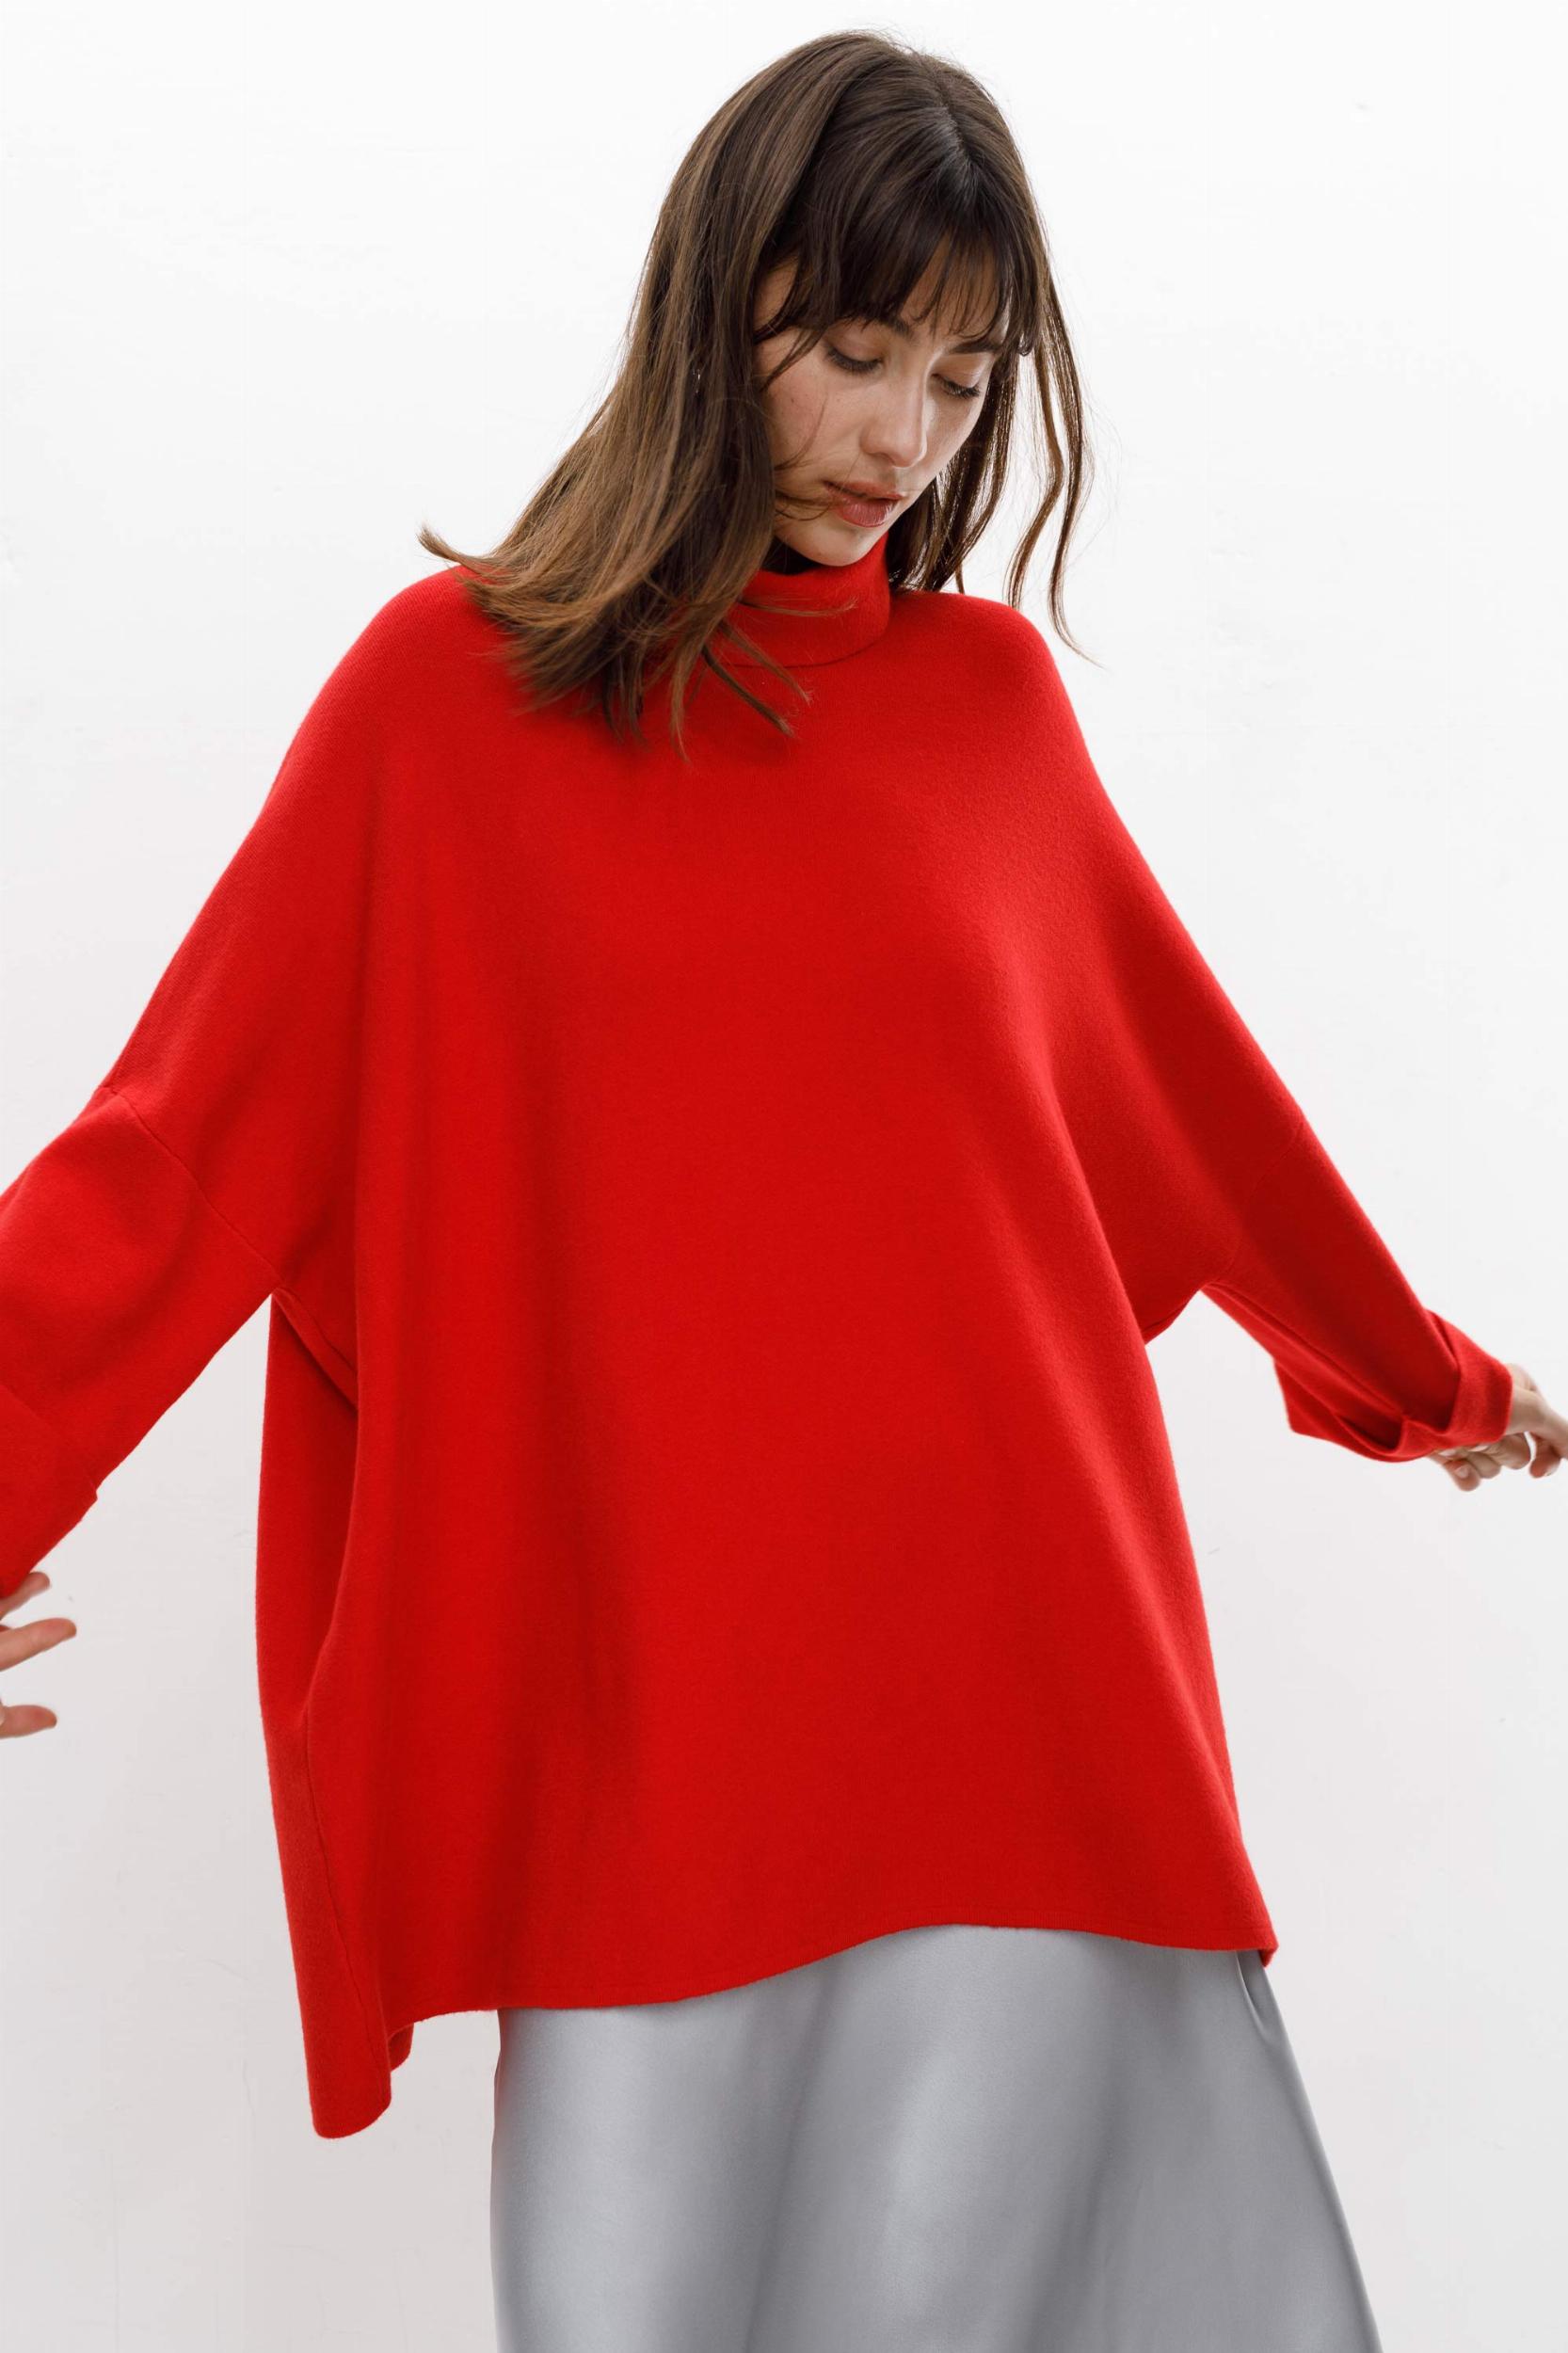 Sweater Vilma rojo talle unico